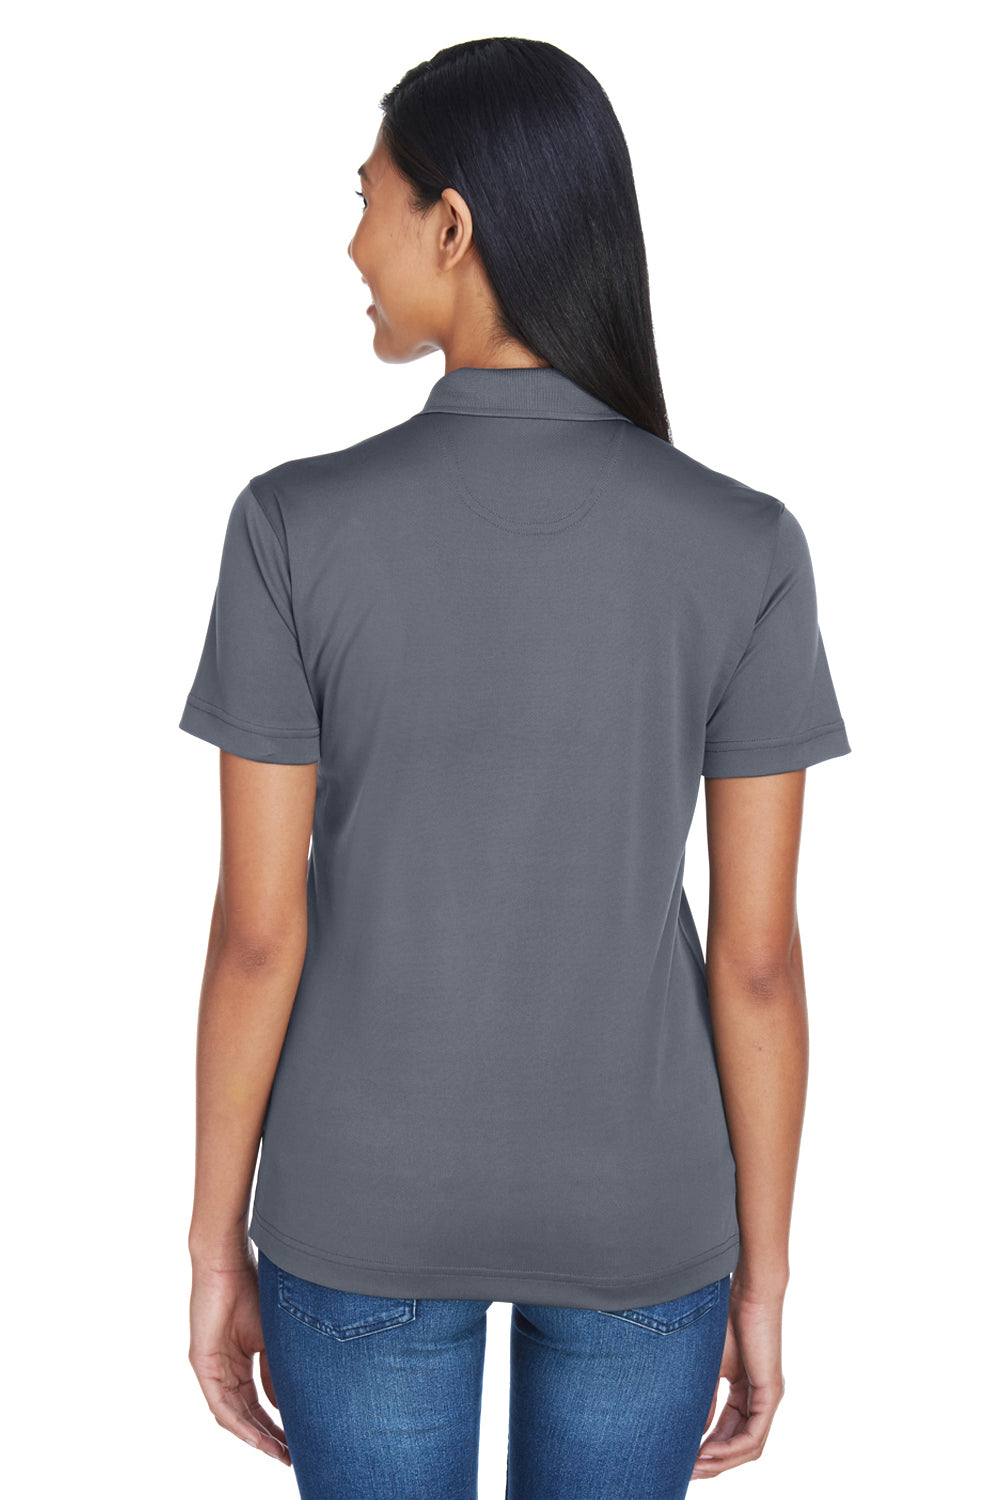 UltraClub 8404 Womens Cool & Dry Moisture Wicking Short Sleeve Polo Shirt Charcoal Grey Back